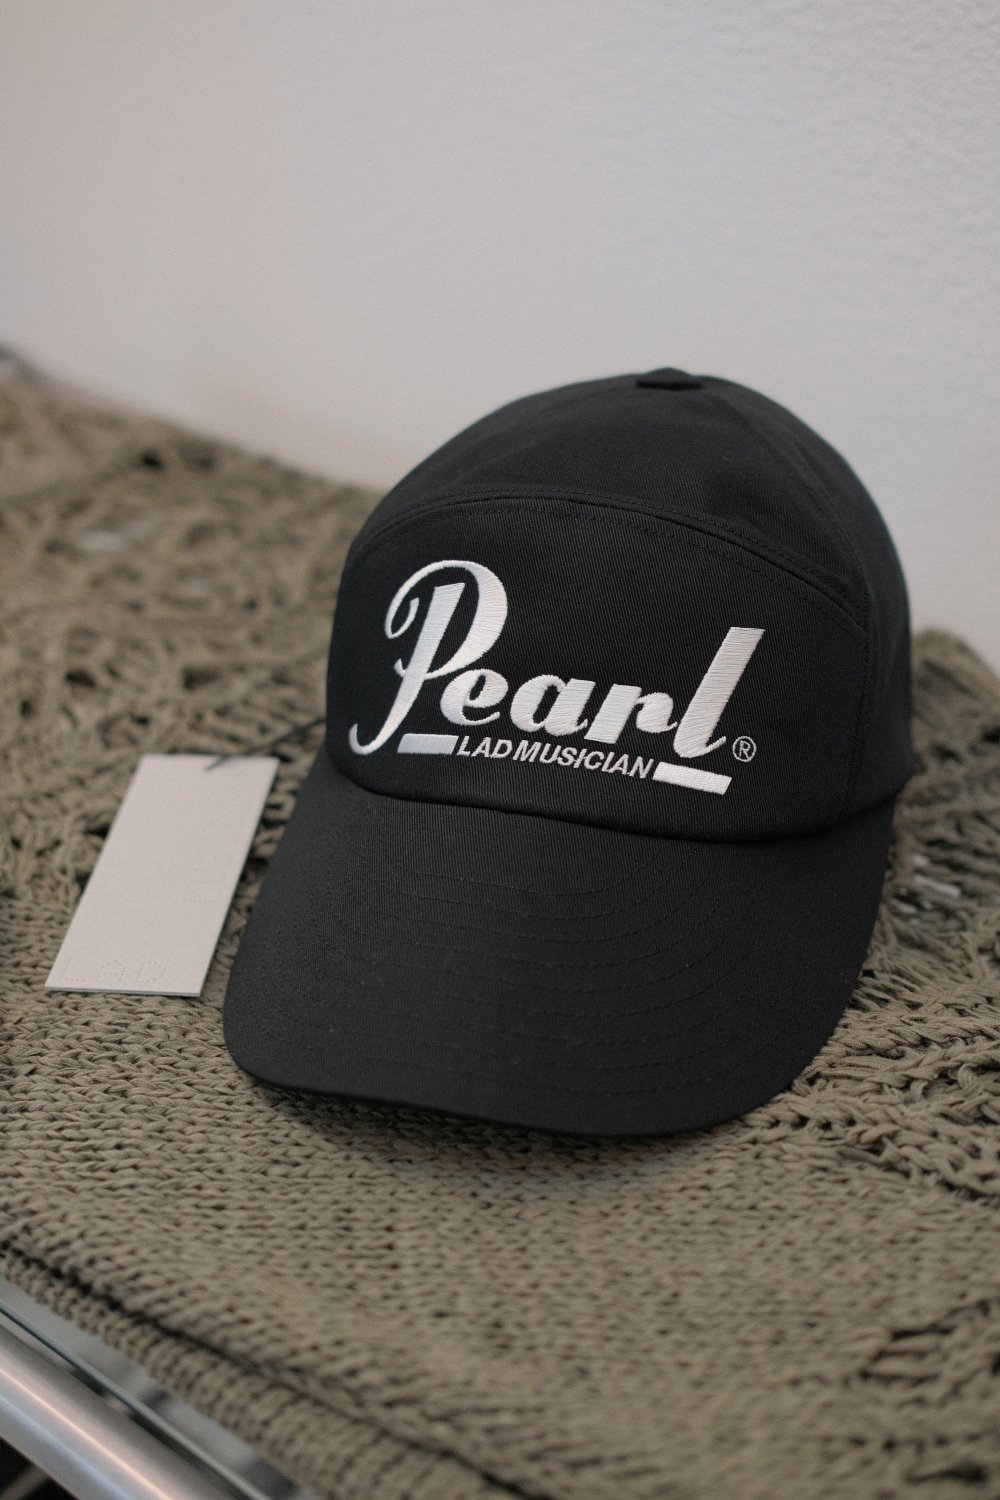 LAD MUSICIAN × Pearl [ラッドミュージシャン×パール] LOGO BIG CAP